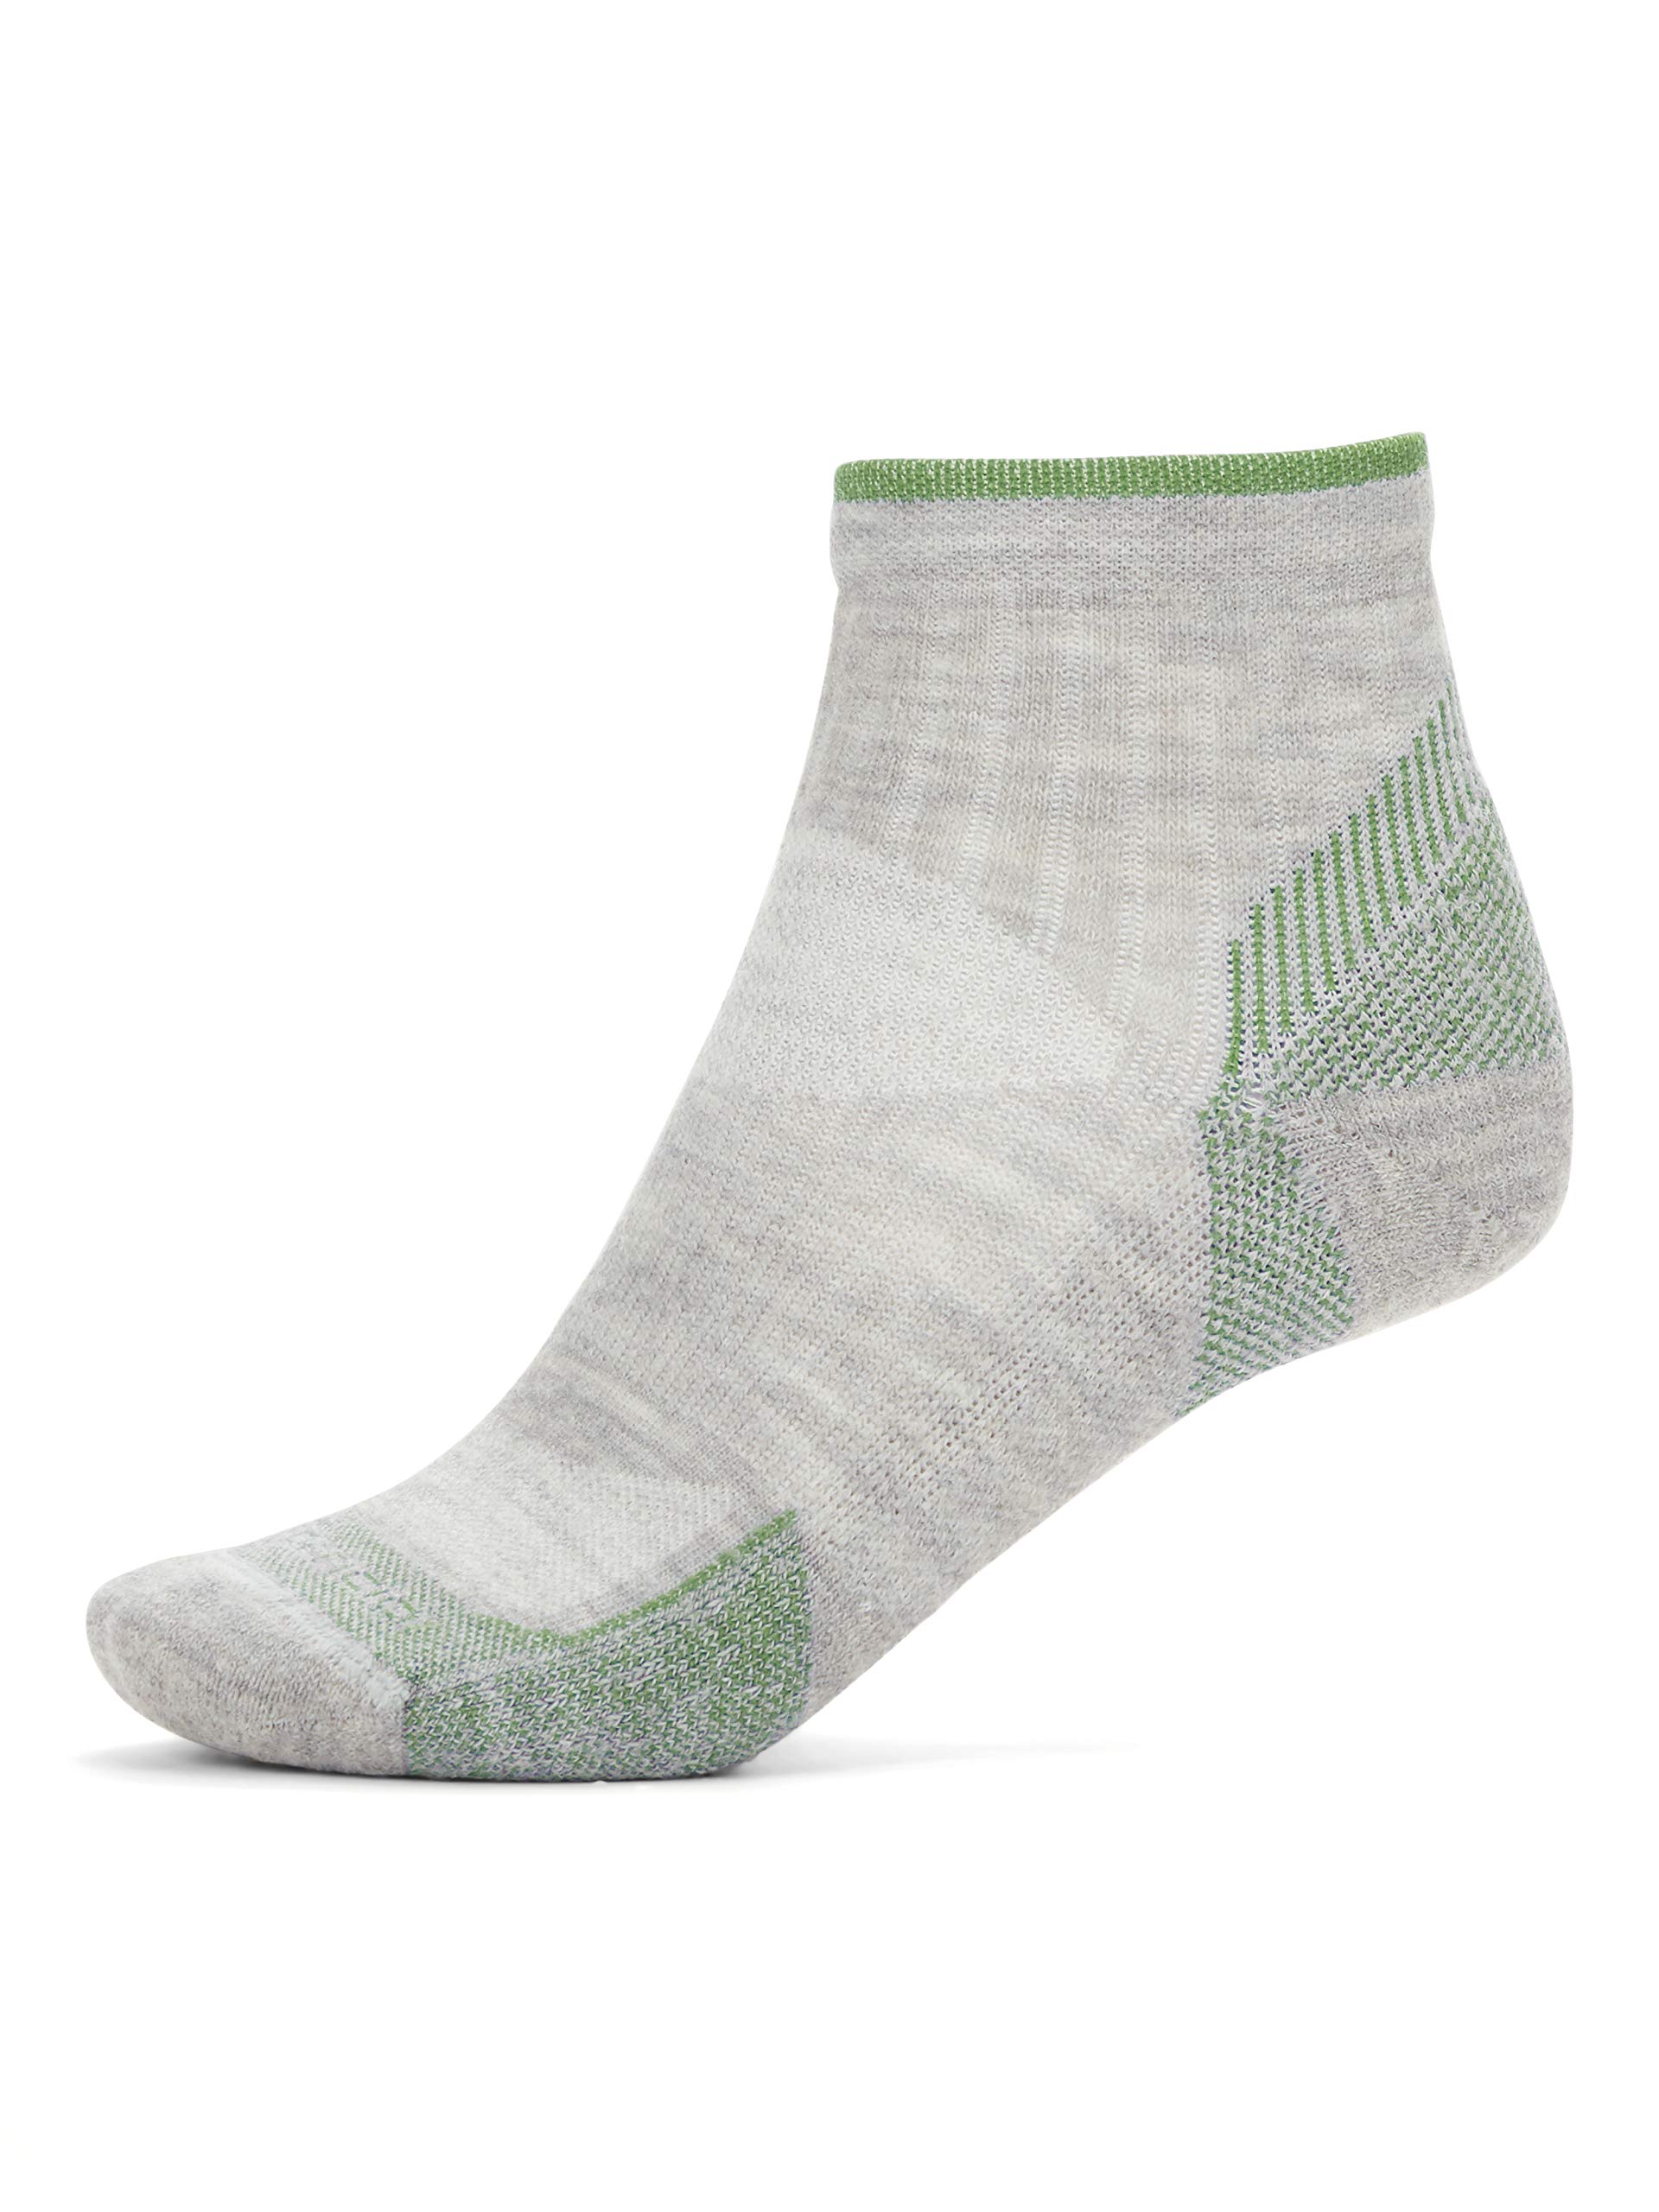 ExOfficio Men's BugsAway Solstice Canyon Qtr Socks, Sleet Heather/Alpine Green, L/XL